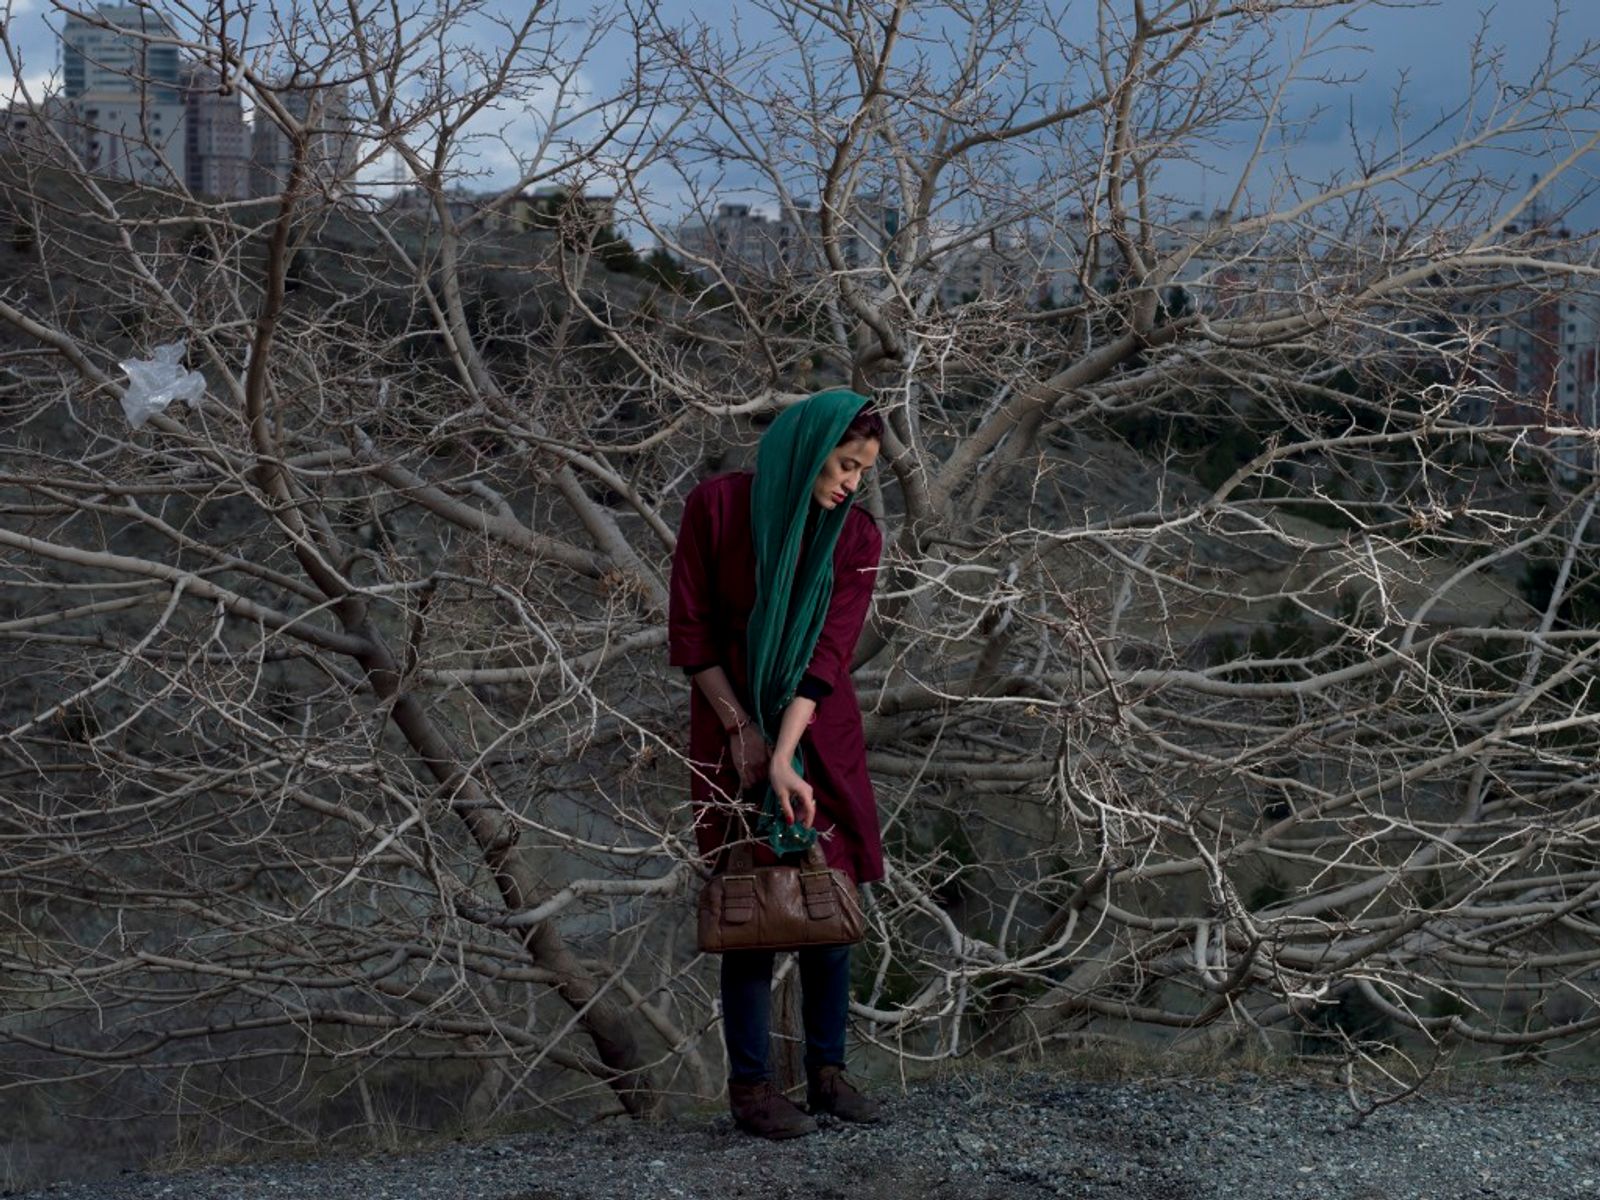 © Newsha Tavakolian (2013 Carmignac Photojournalism Award winner)